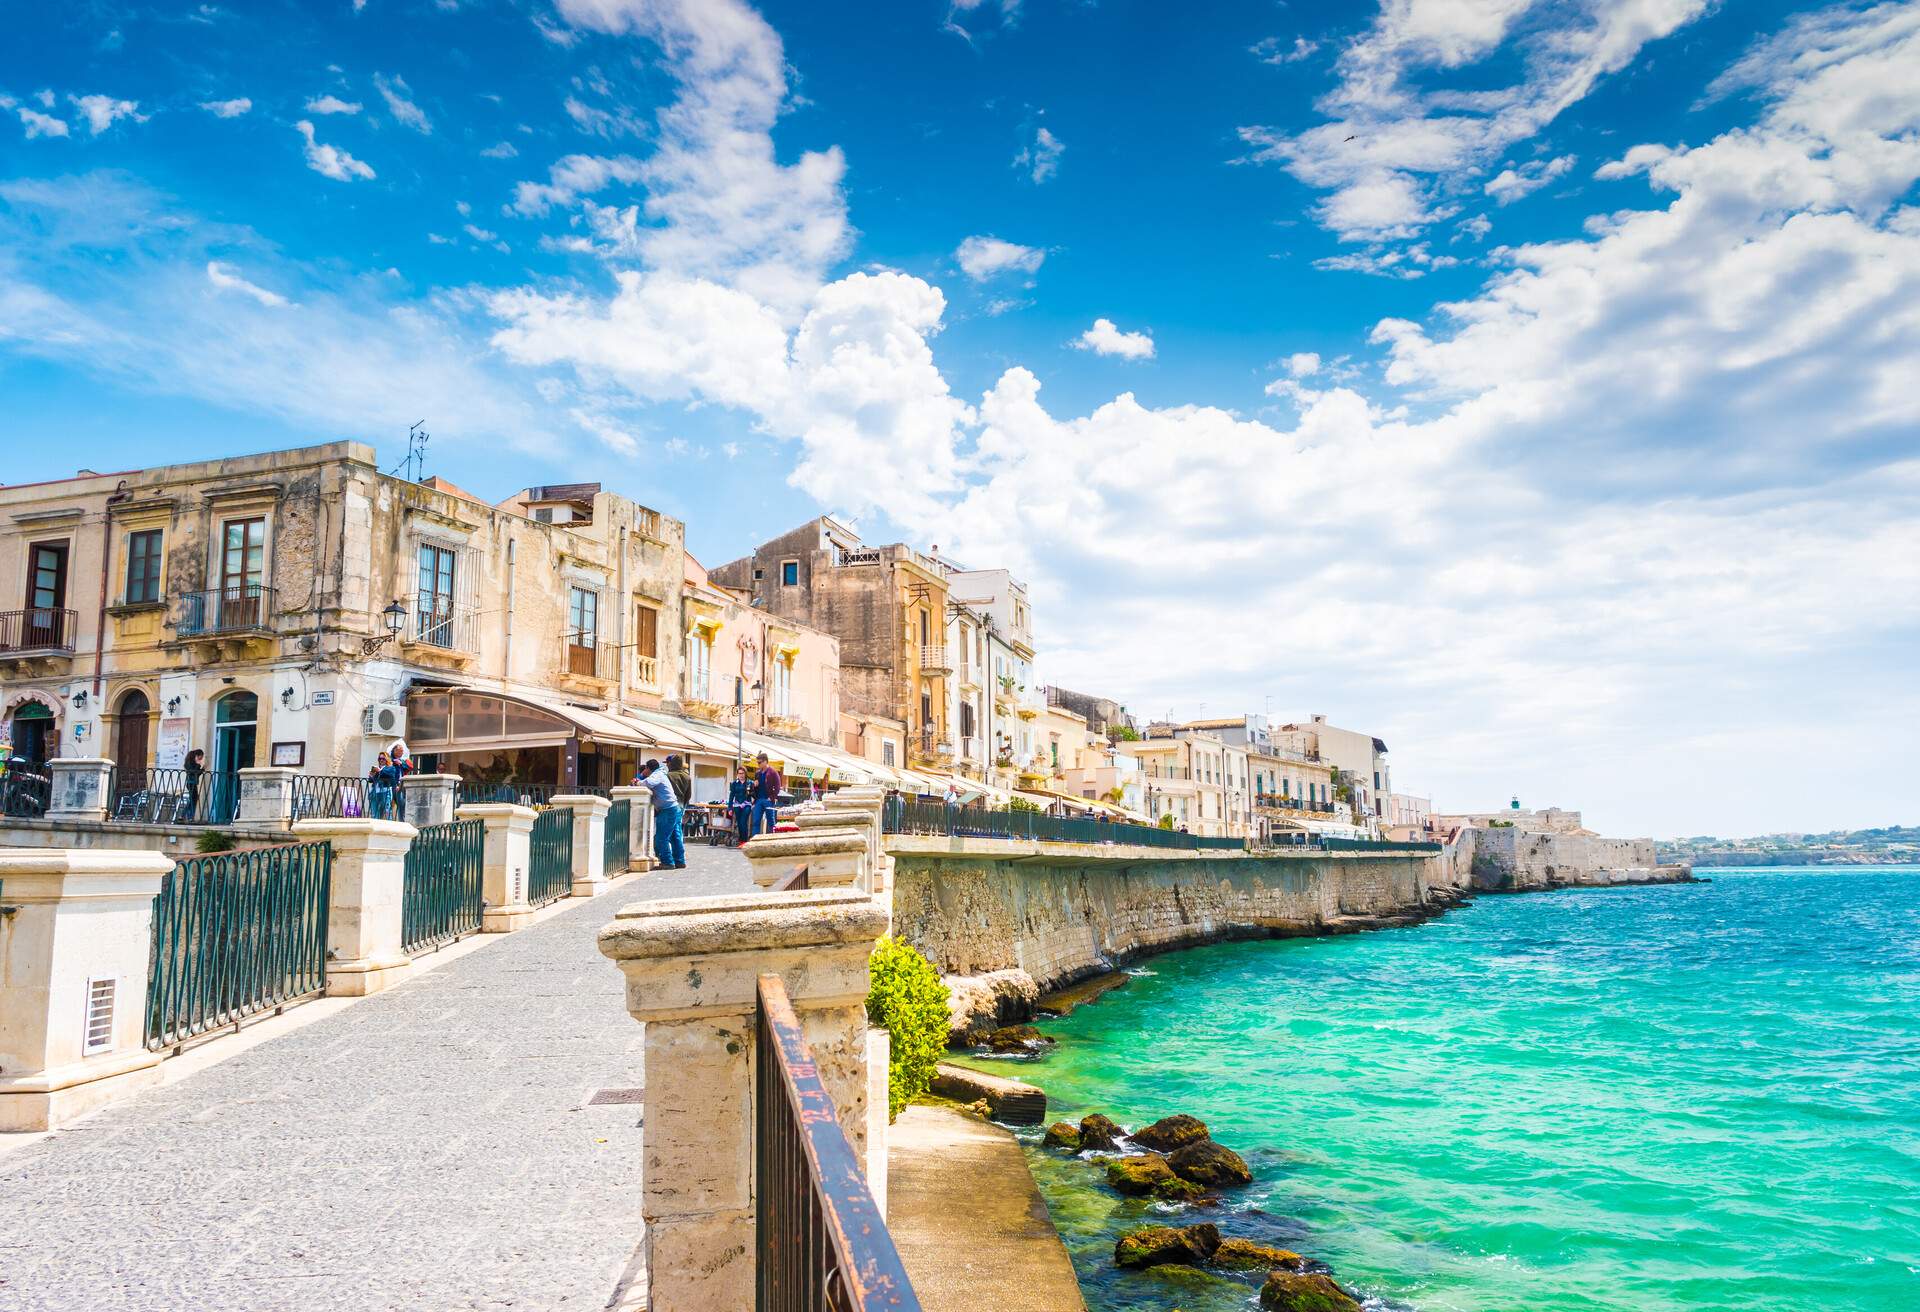 Coast of Ortigia island at city of Syracuse, Sicily, Italy. Beautiful travel photo of Sicily.; Shutterstock ID 521508244